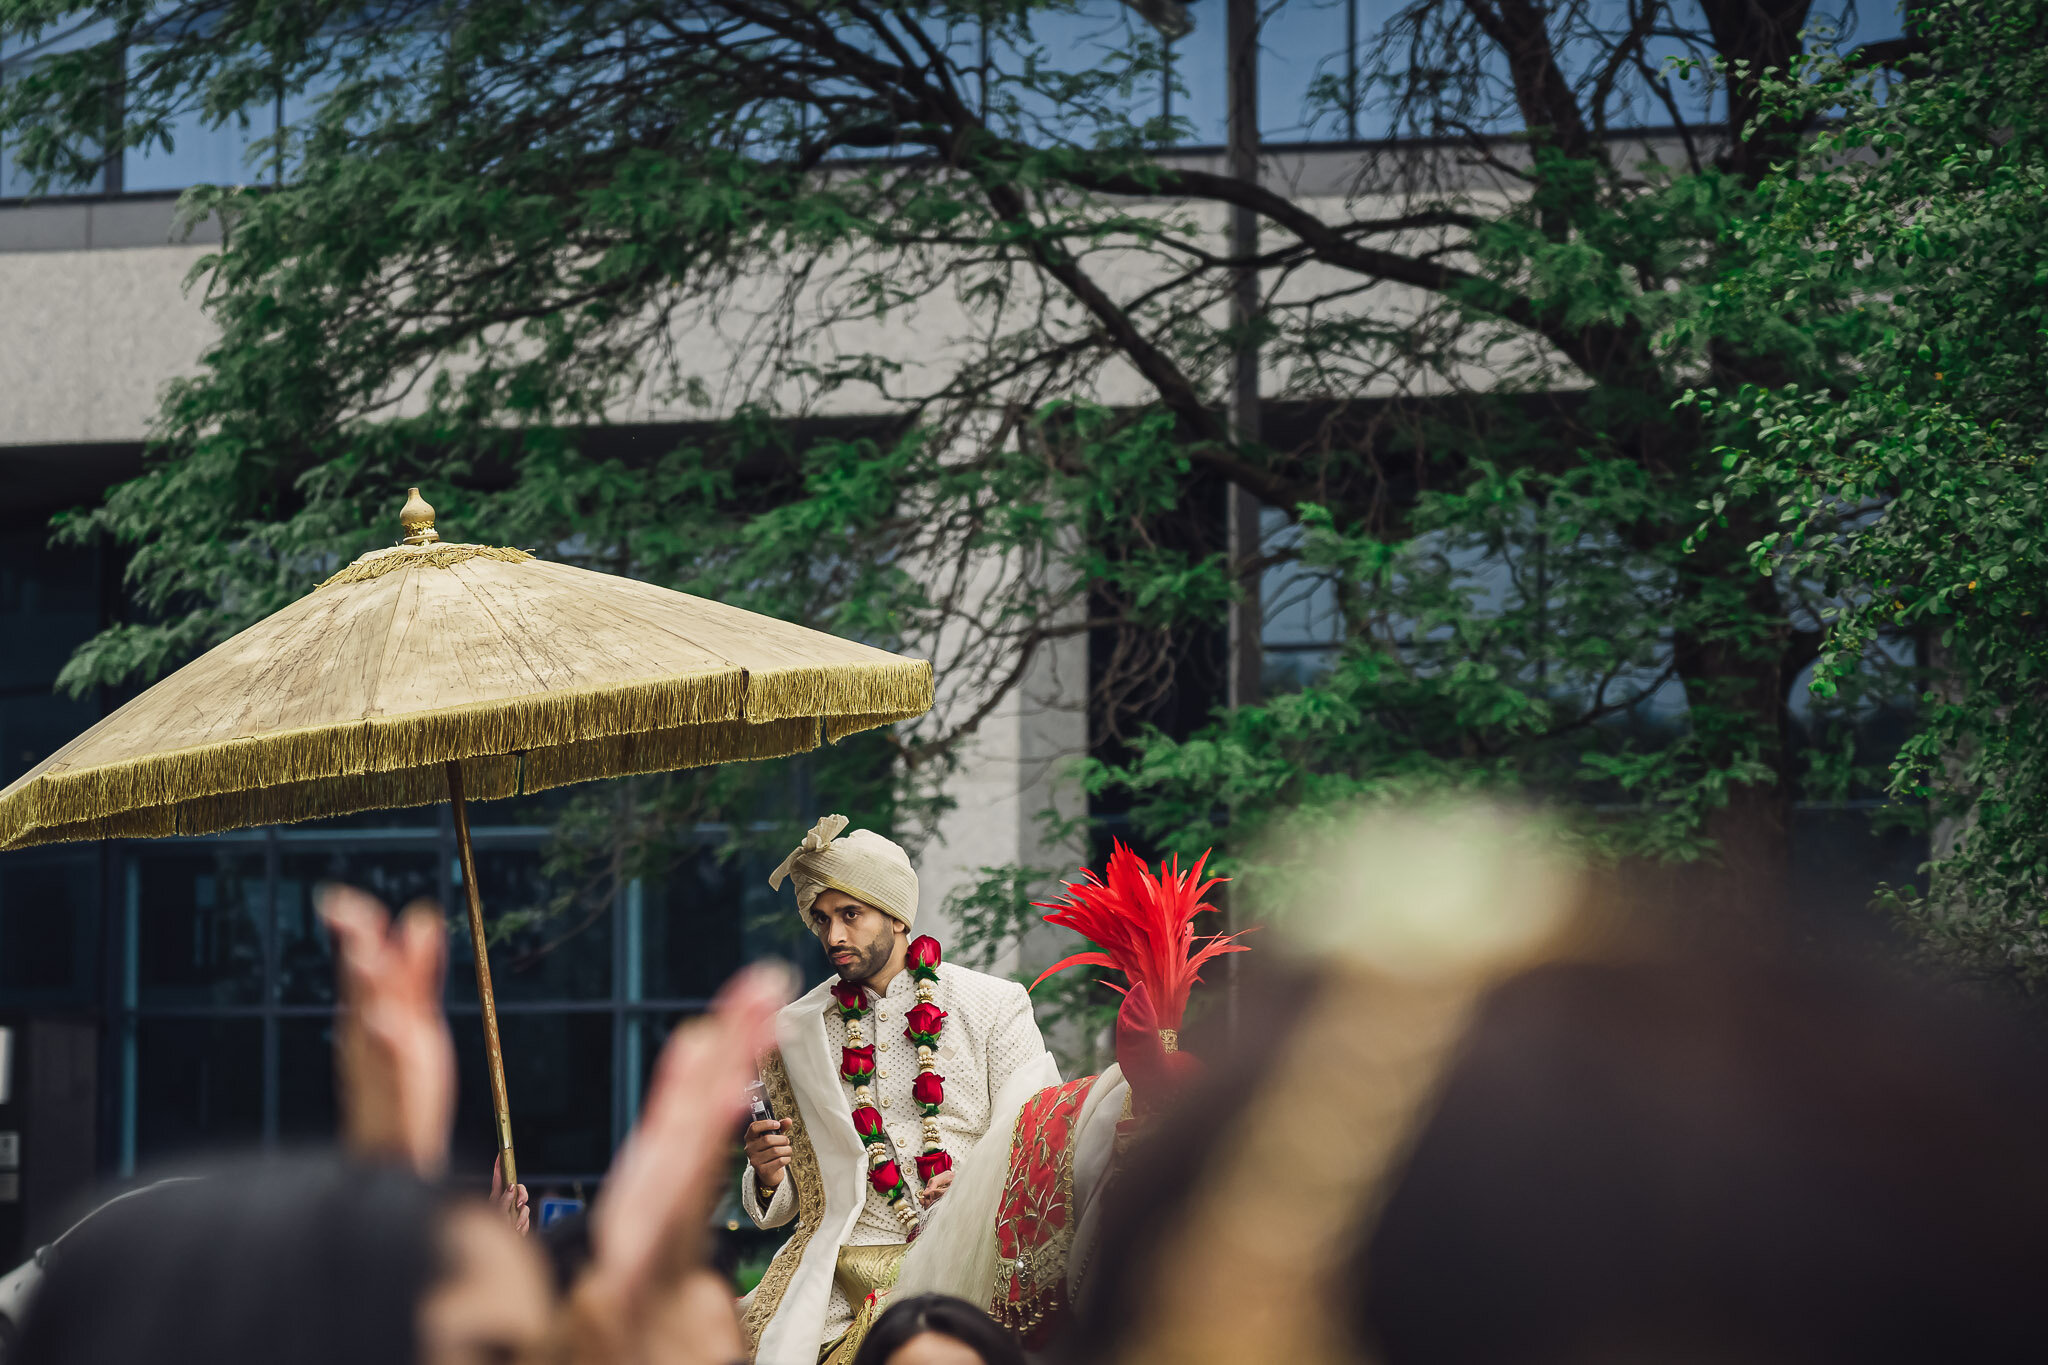 Sheraton Mahwah Hotel Indian wedding baraat procession